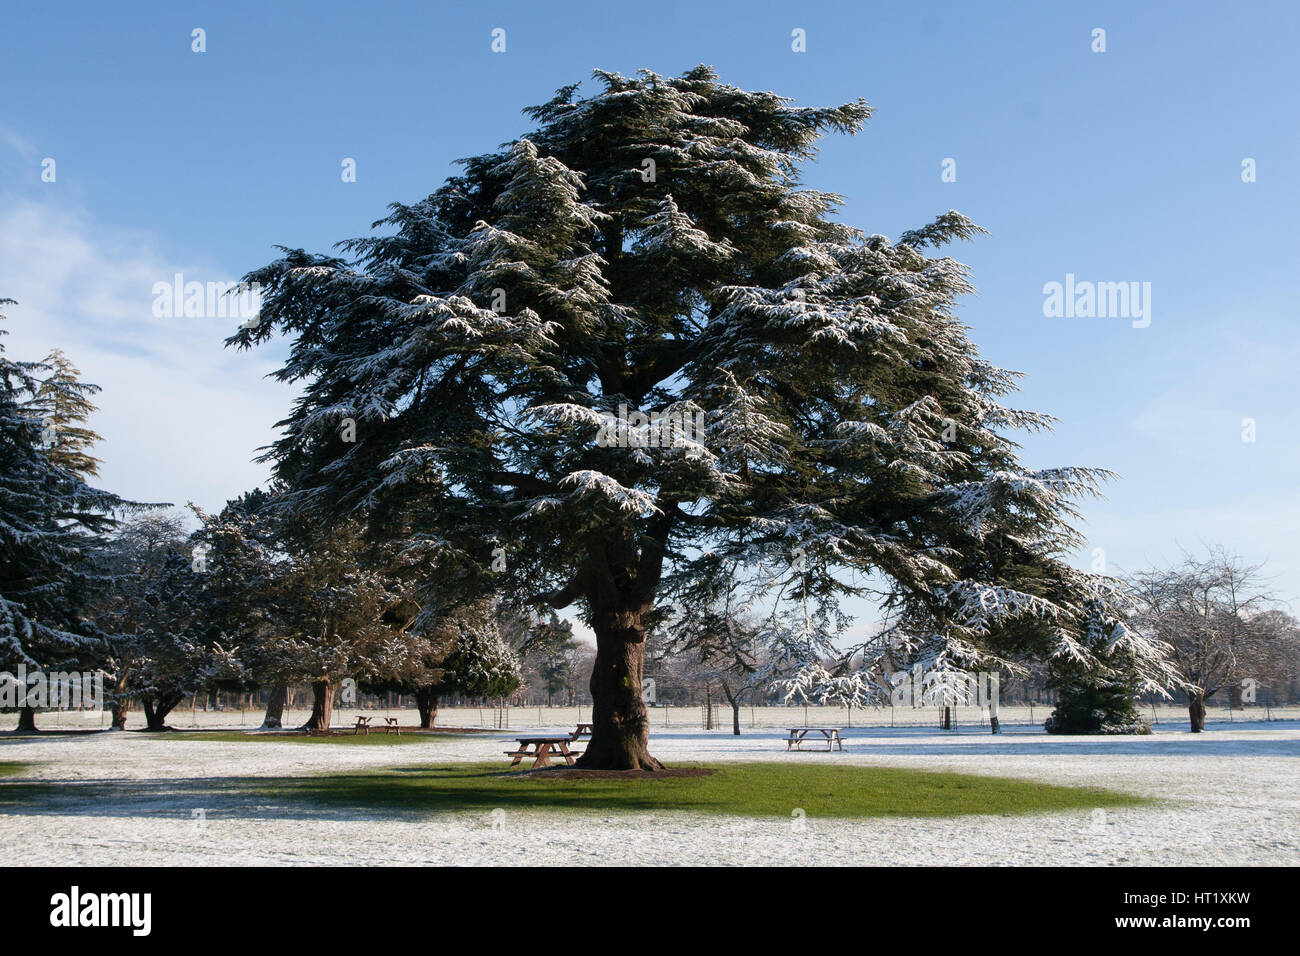 Winter in Ireland - Tree covered in snow in Phoenix Park, Dublin Stock Photo